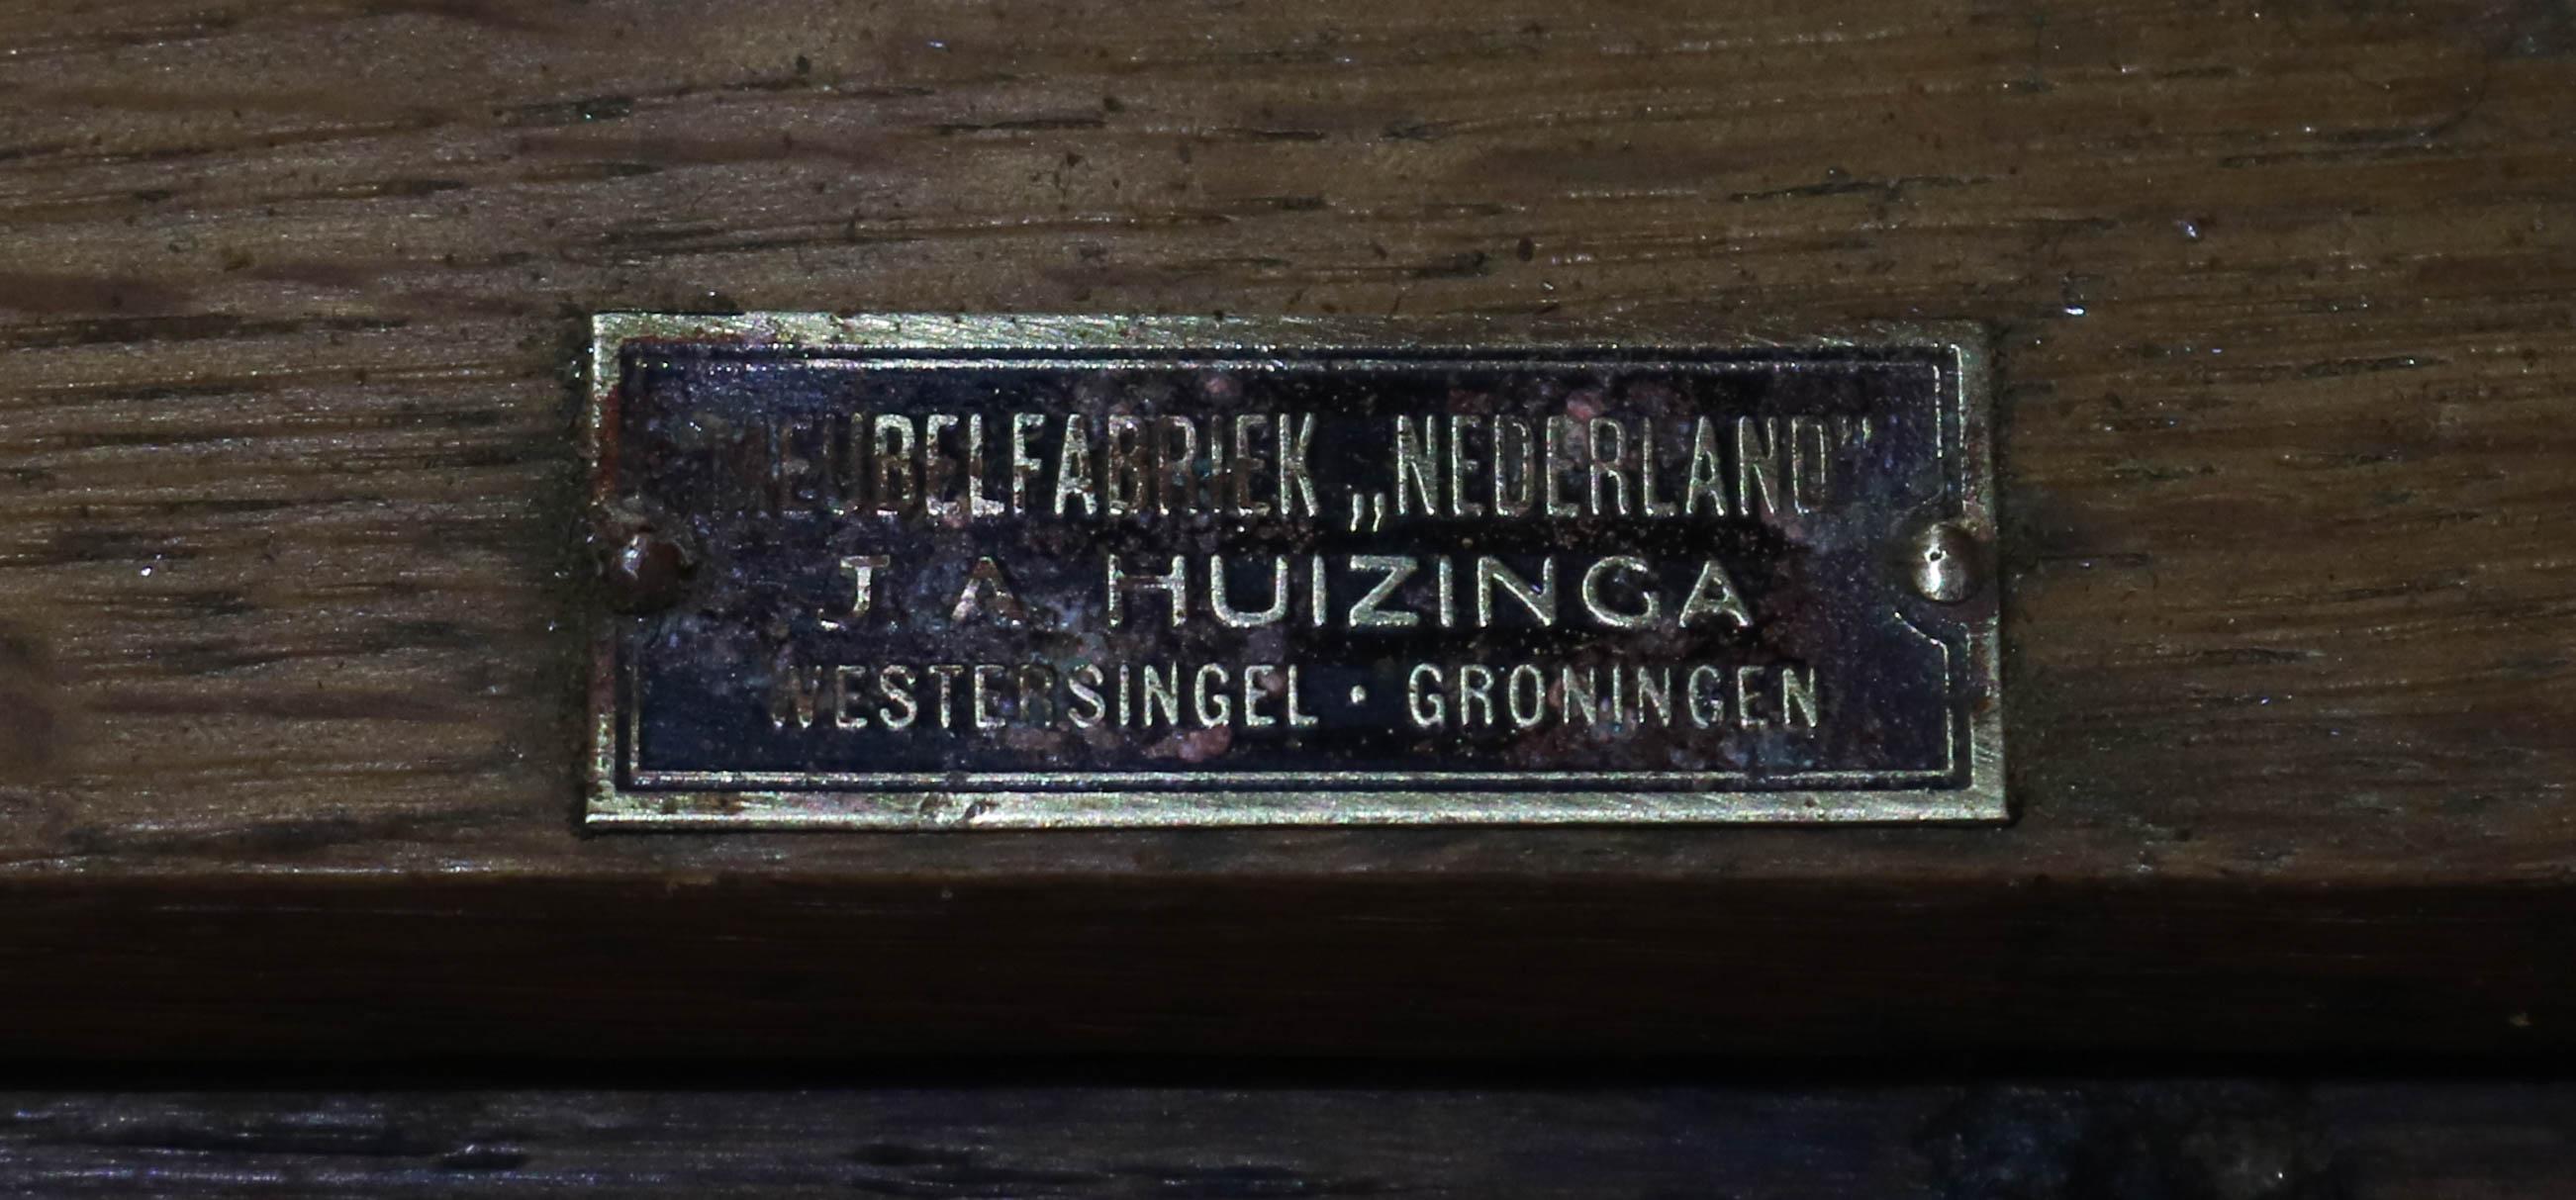 Dutch Oak Art Nouveau Arts & Crafts Bookcase by A.R. Wittop Koning for J.A. Huizinga